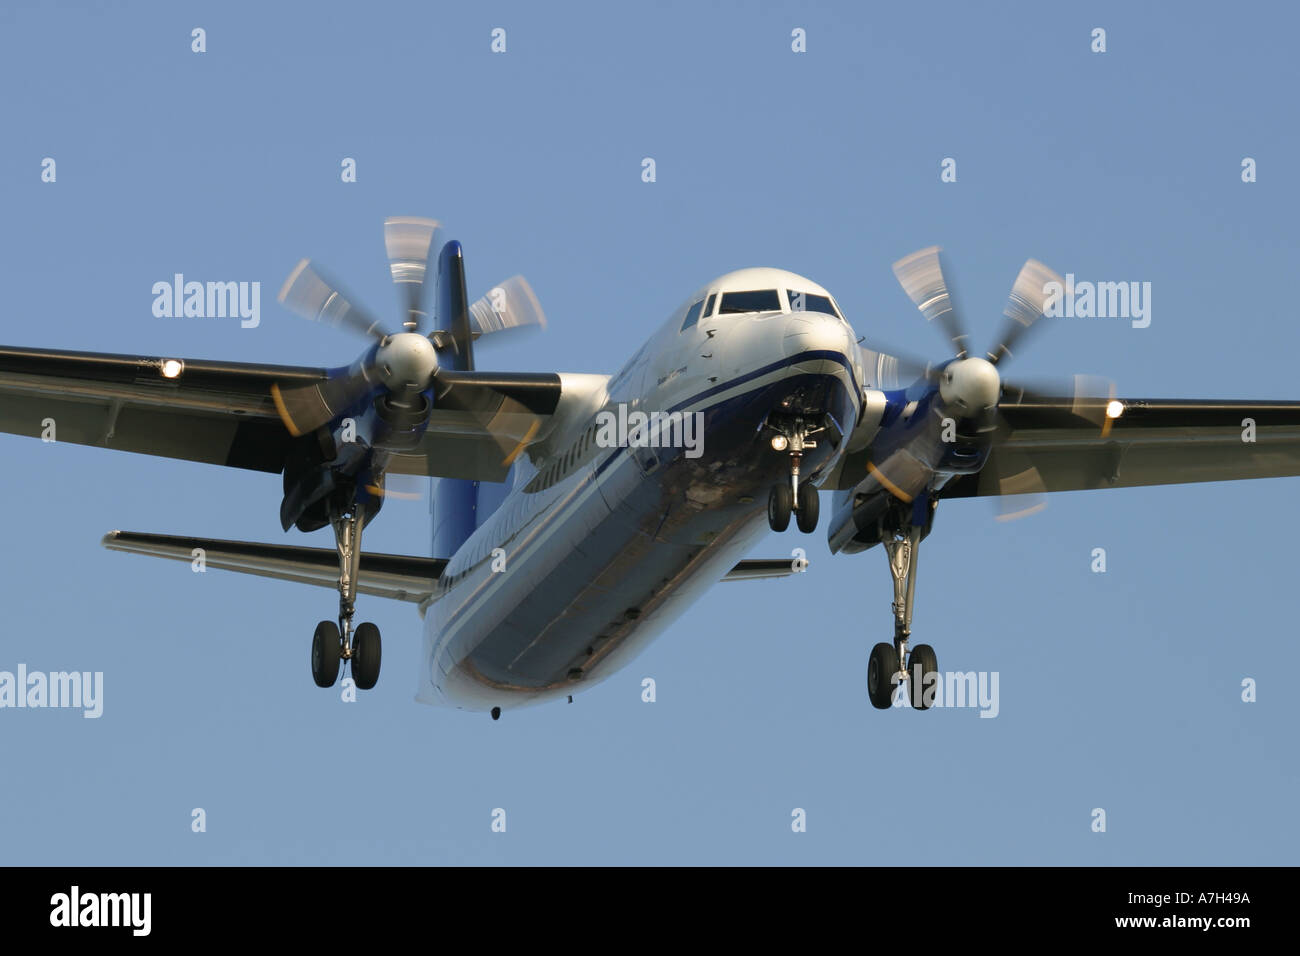 Fokker 50 VLM Airlines Stock Photo